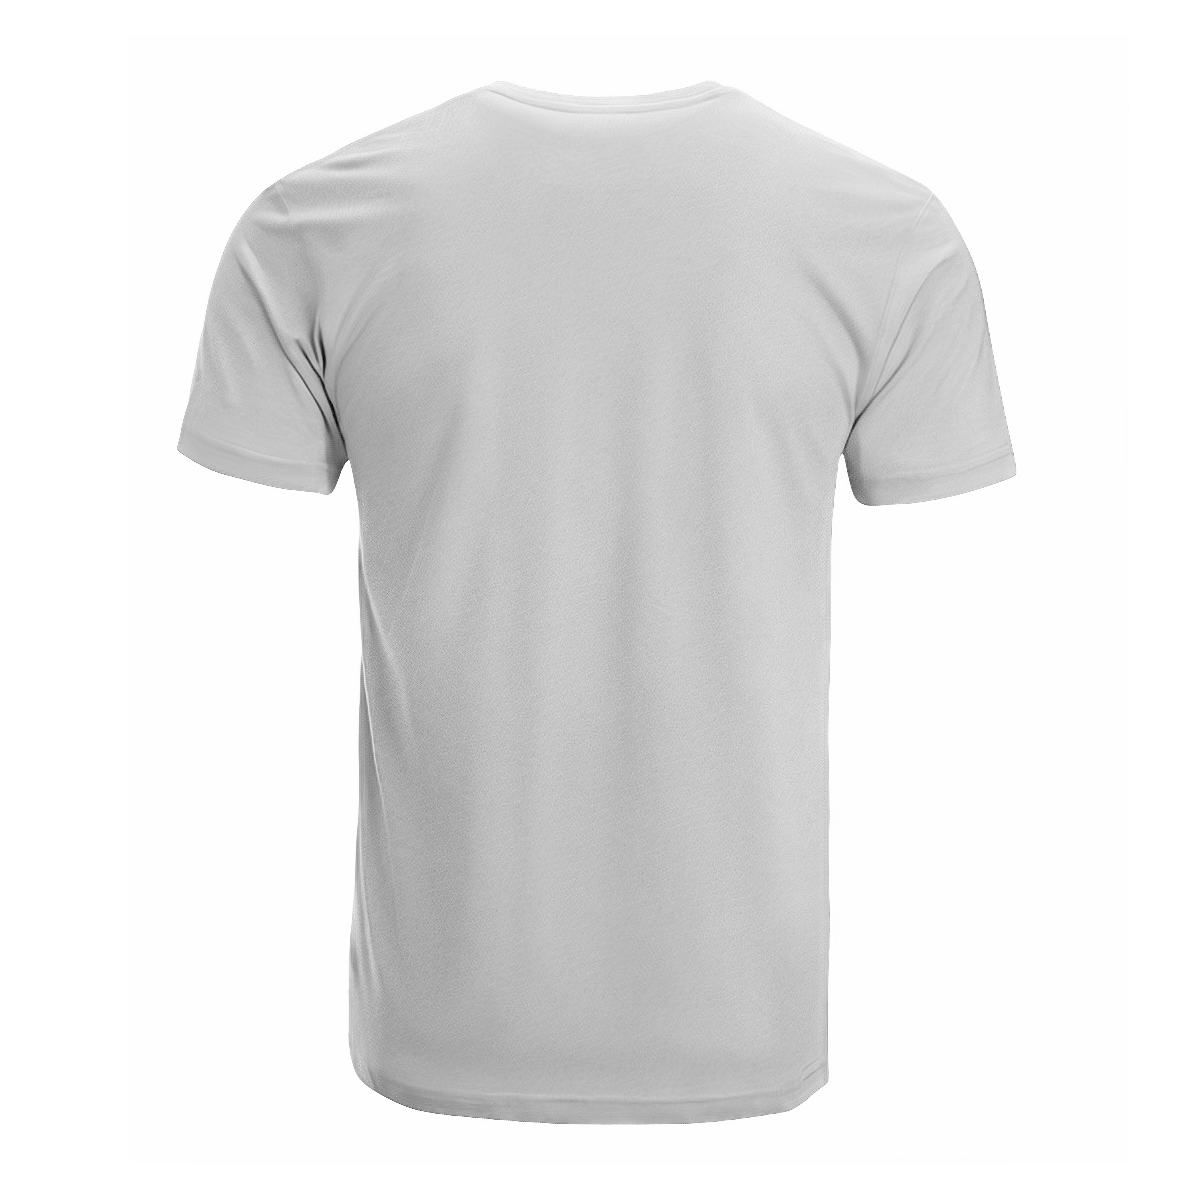 Primrose Tartan Crest T-shirt - I'm not yelling style